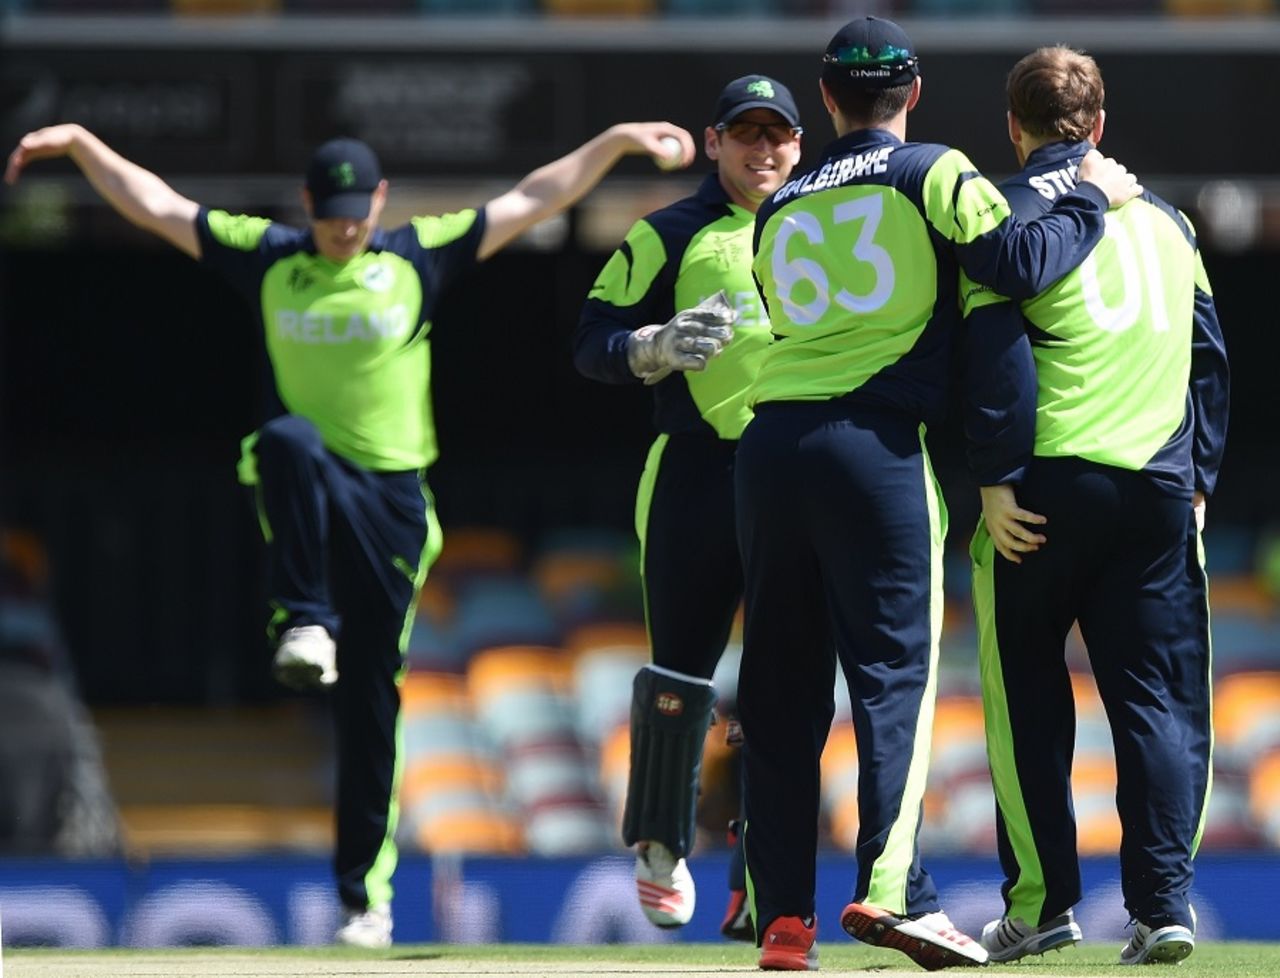 Ireland celebrate the wicket of Krishna Chandran, Ireland v UAE, World Cup 2015, Group B, Brisbane, February 25, 2015